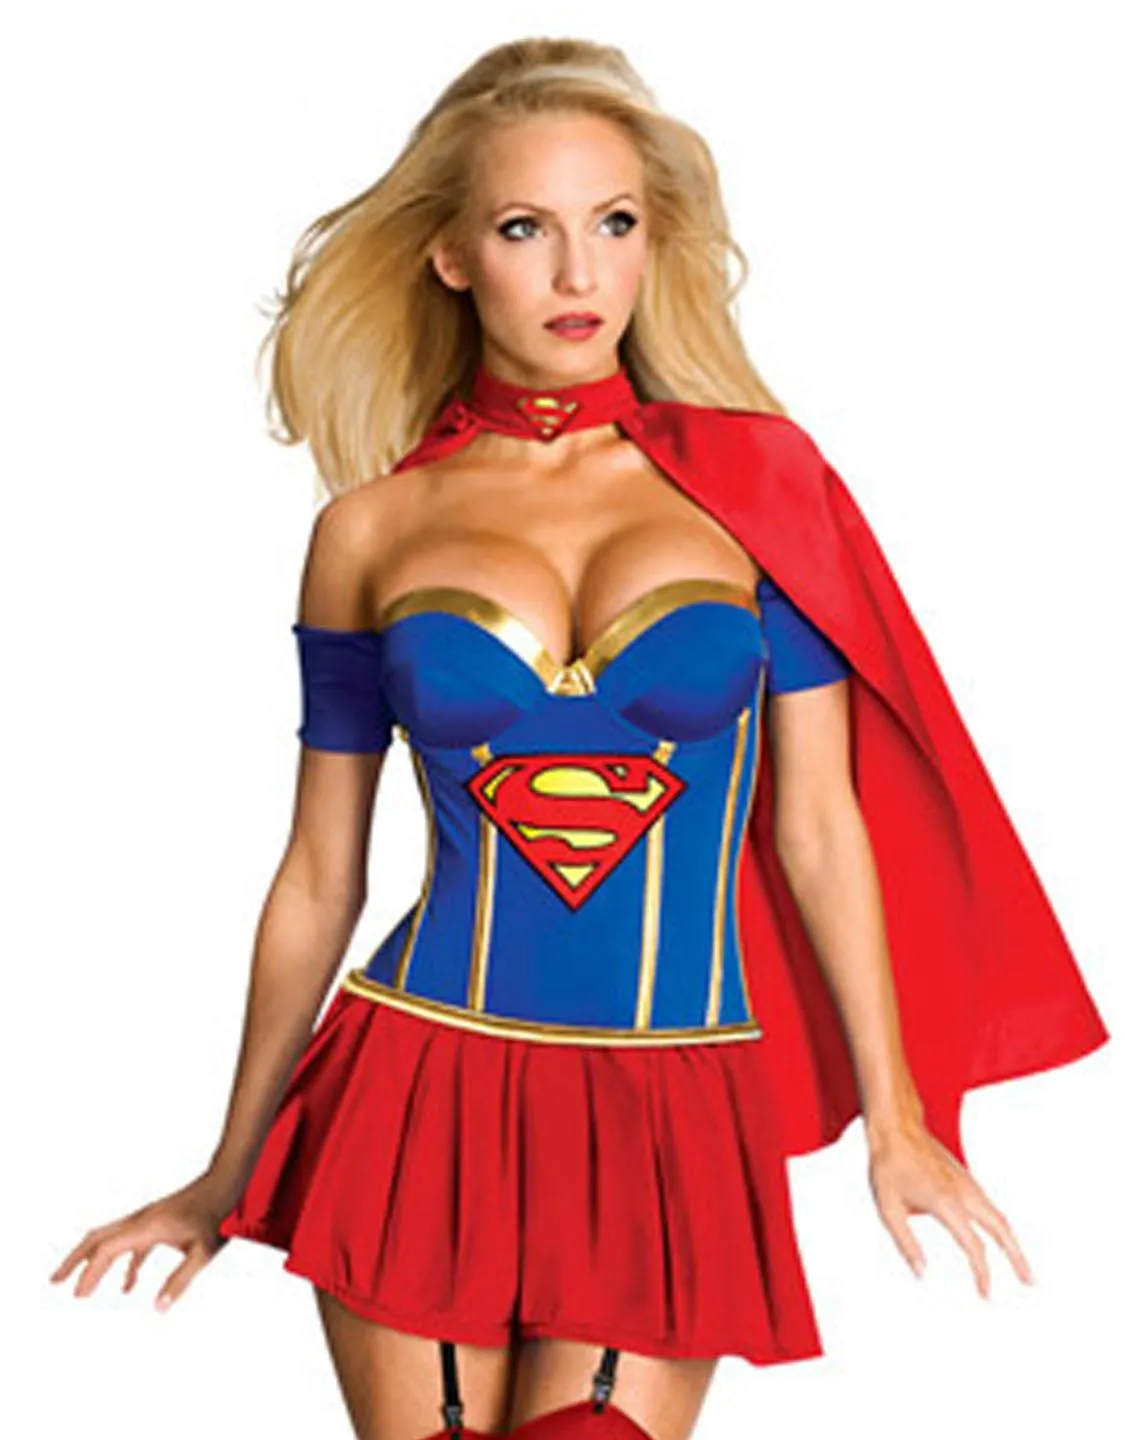 Classique Carton Rôle Costumes DHalloween Superwoman Sexy Supergirl Costume DC Cosplay Déguisement Costume De Carnaval W208994 Du 14,17 € DHgate